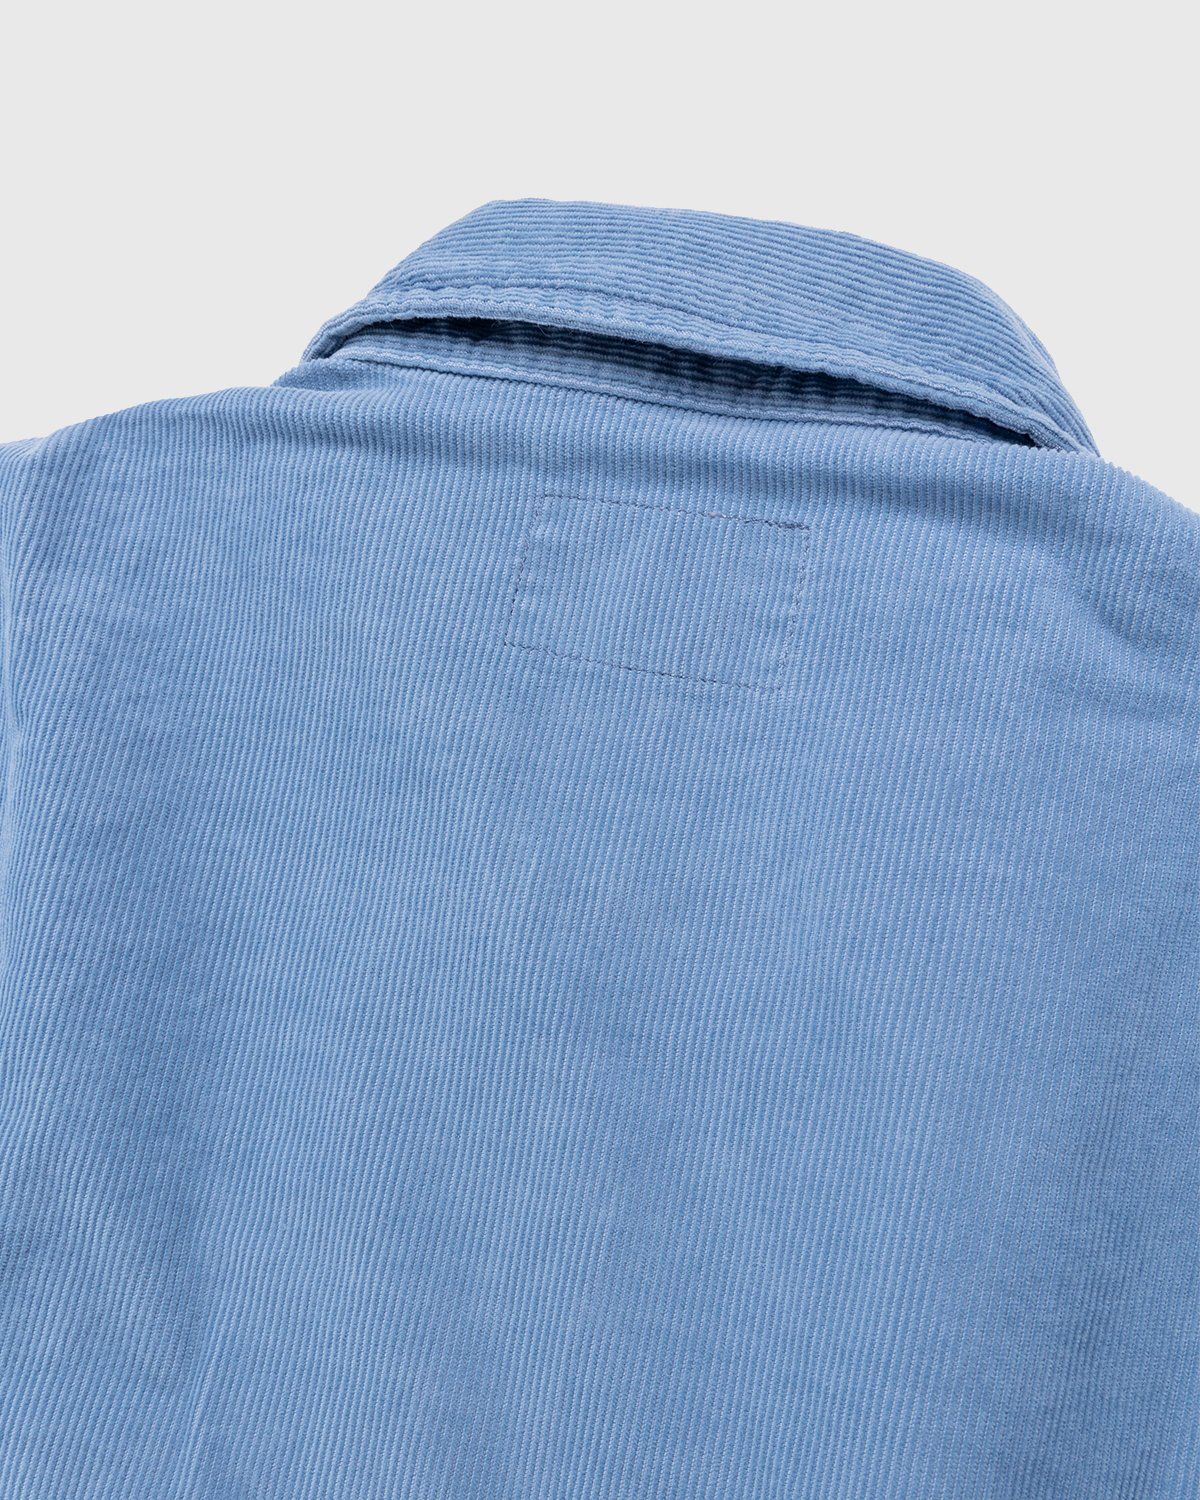 Carhartt WIP – Dixon Shirt Jacket Icy Water Rinsed - Overshirt - Blue - Image 5